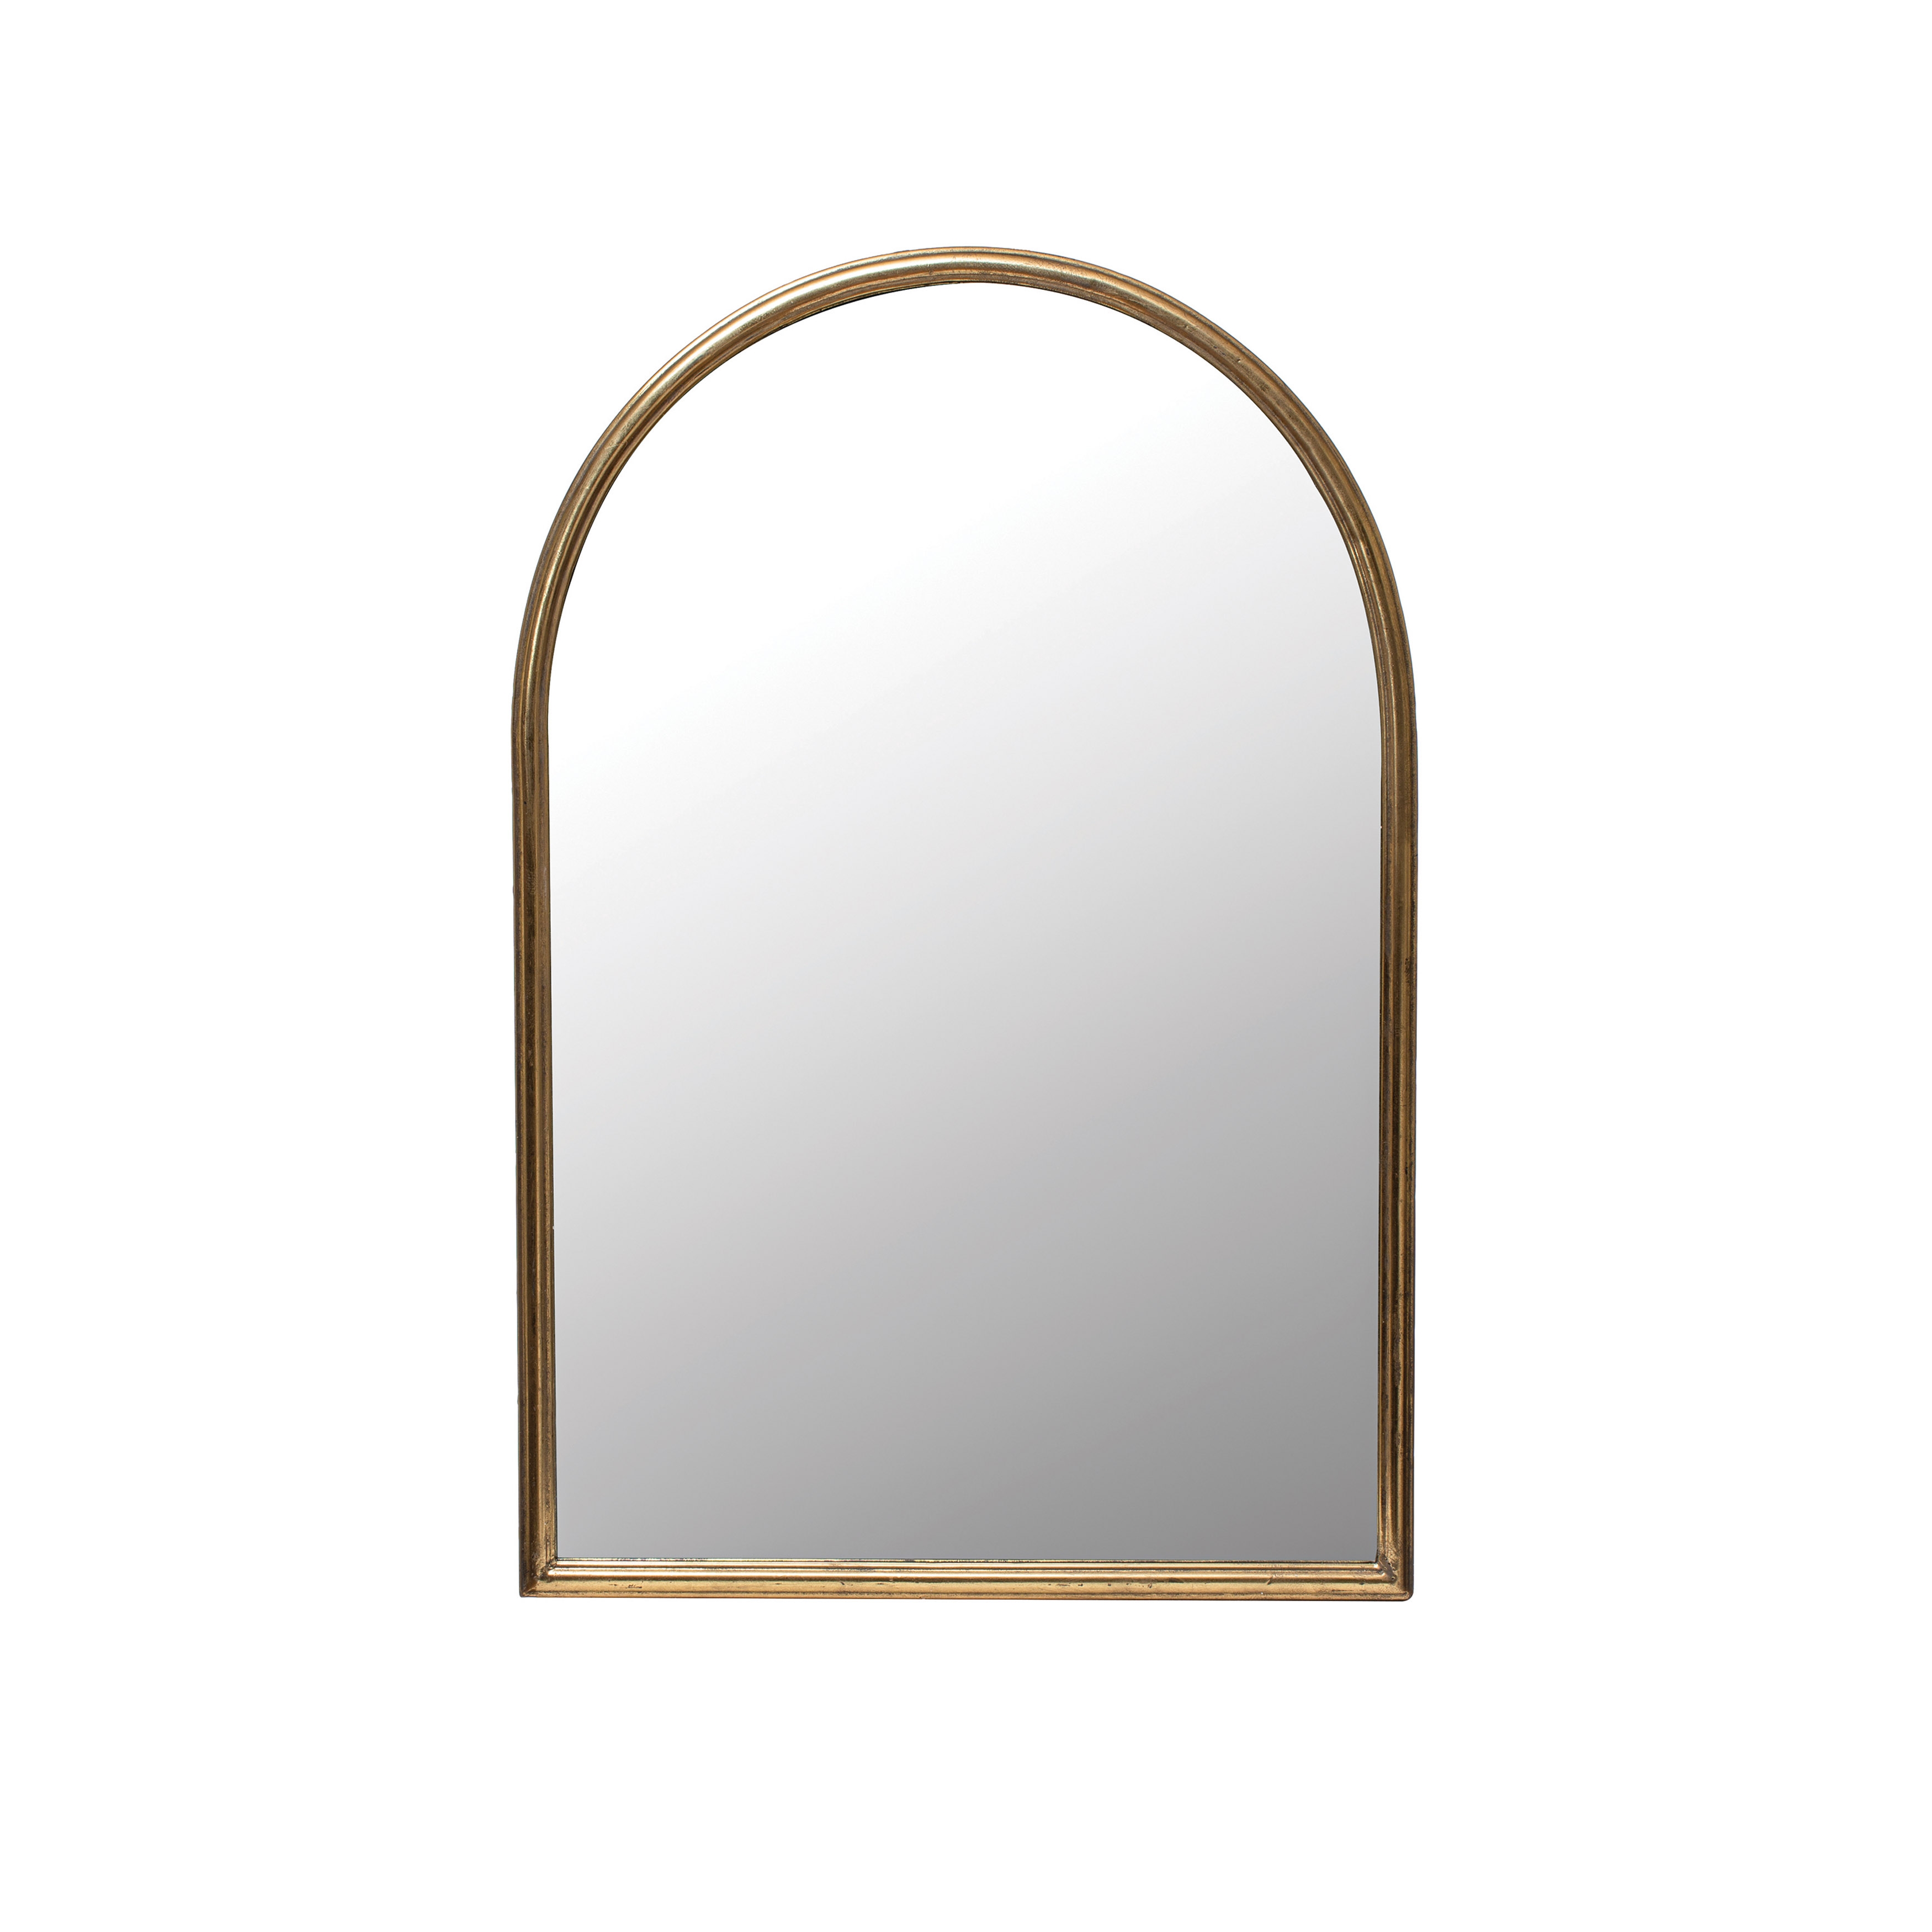 Jacquotte Arched Mirror, Antique Gold - Image 0